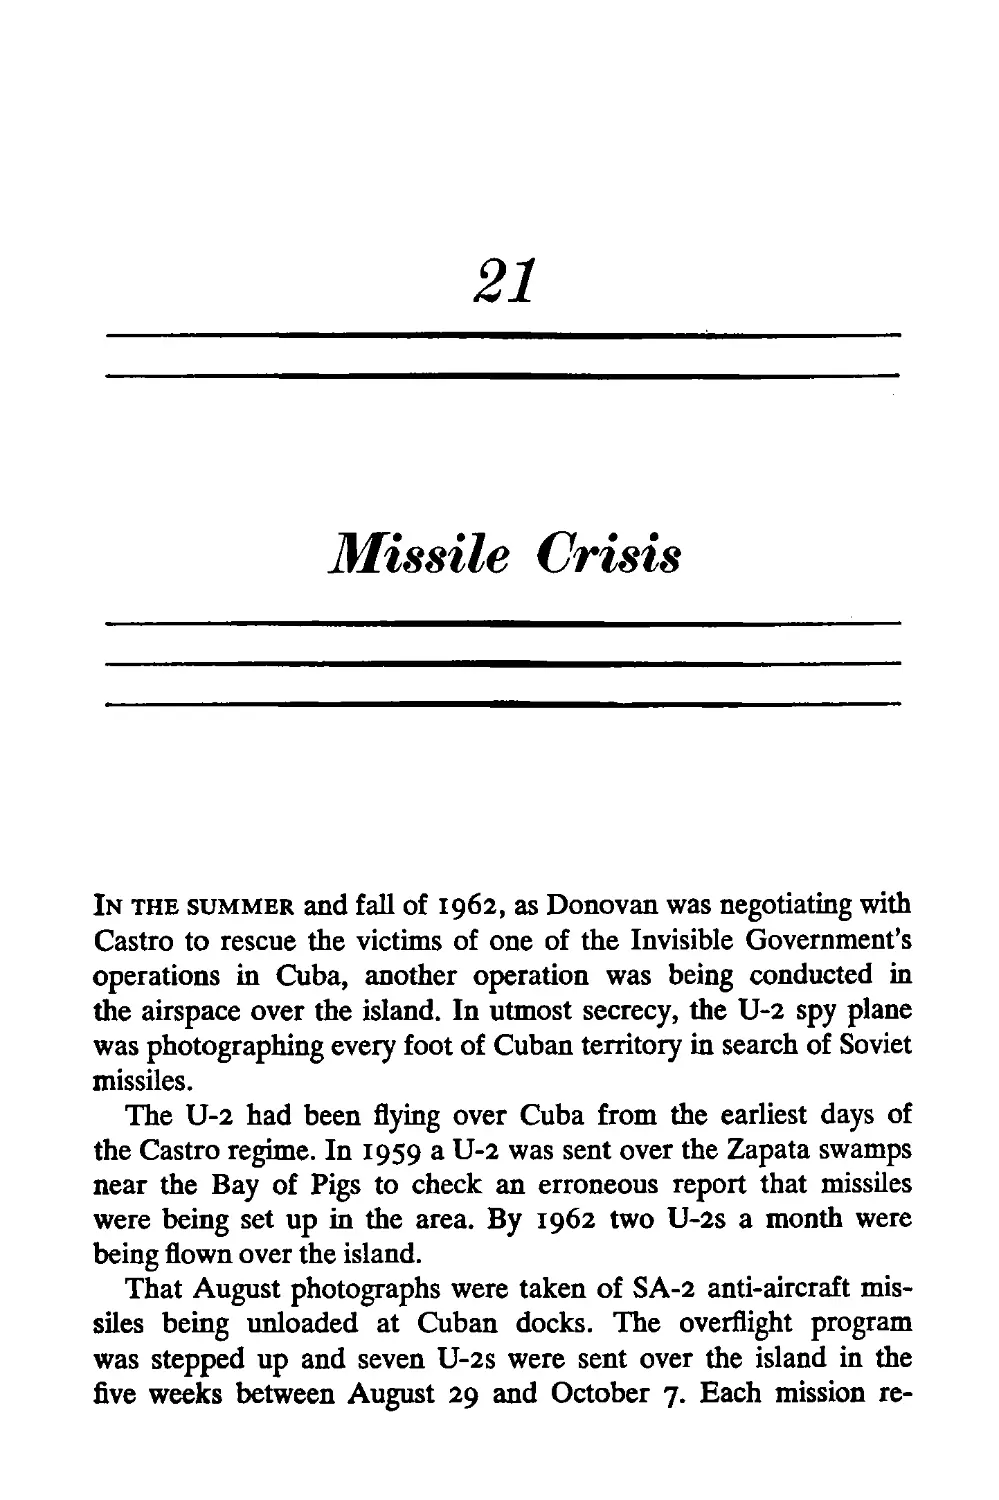 21. Missile Crisis